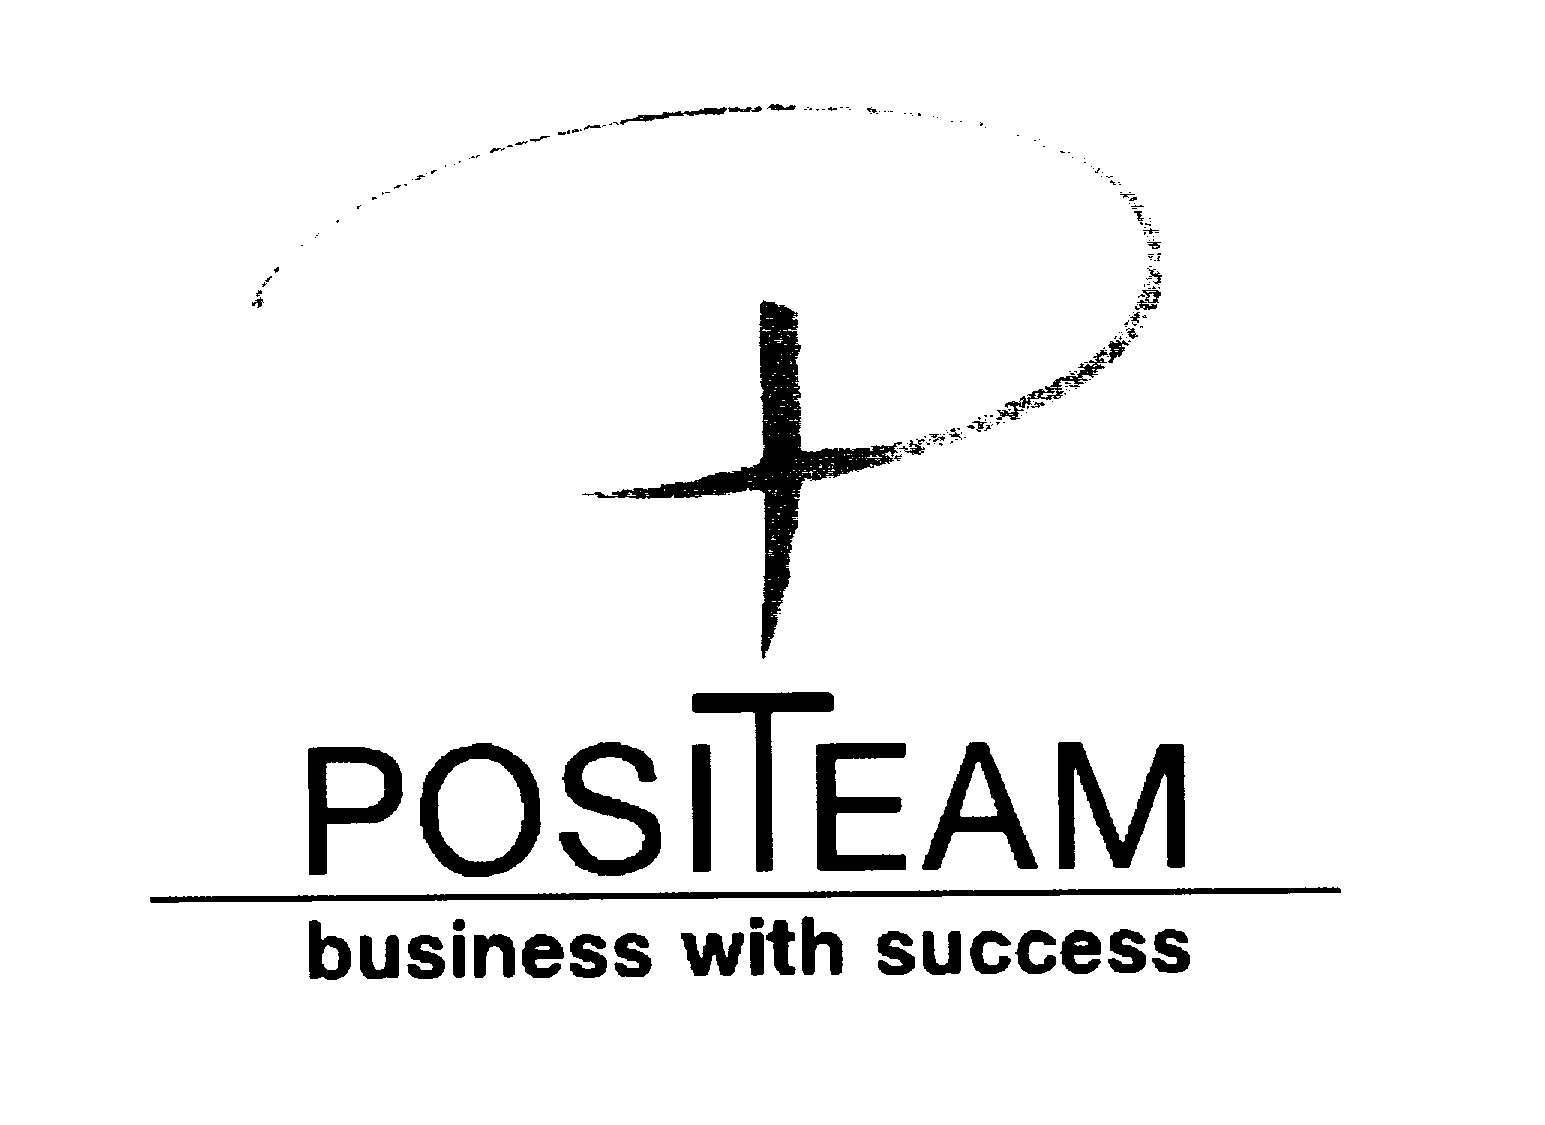  P POSITEAM BUSINESS WITH SUCCESS